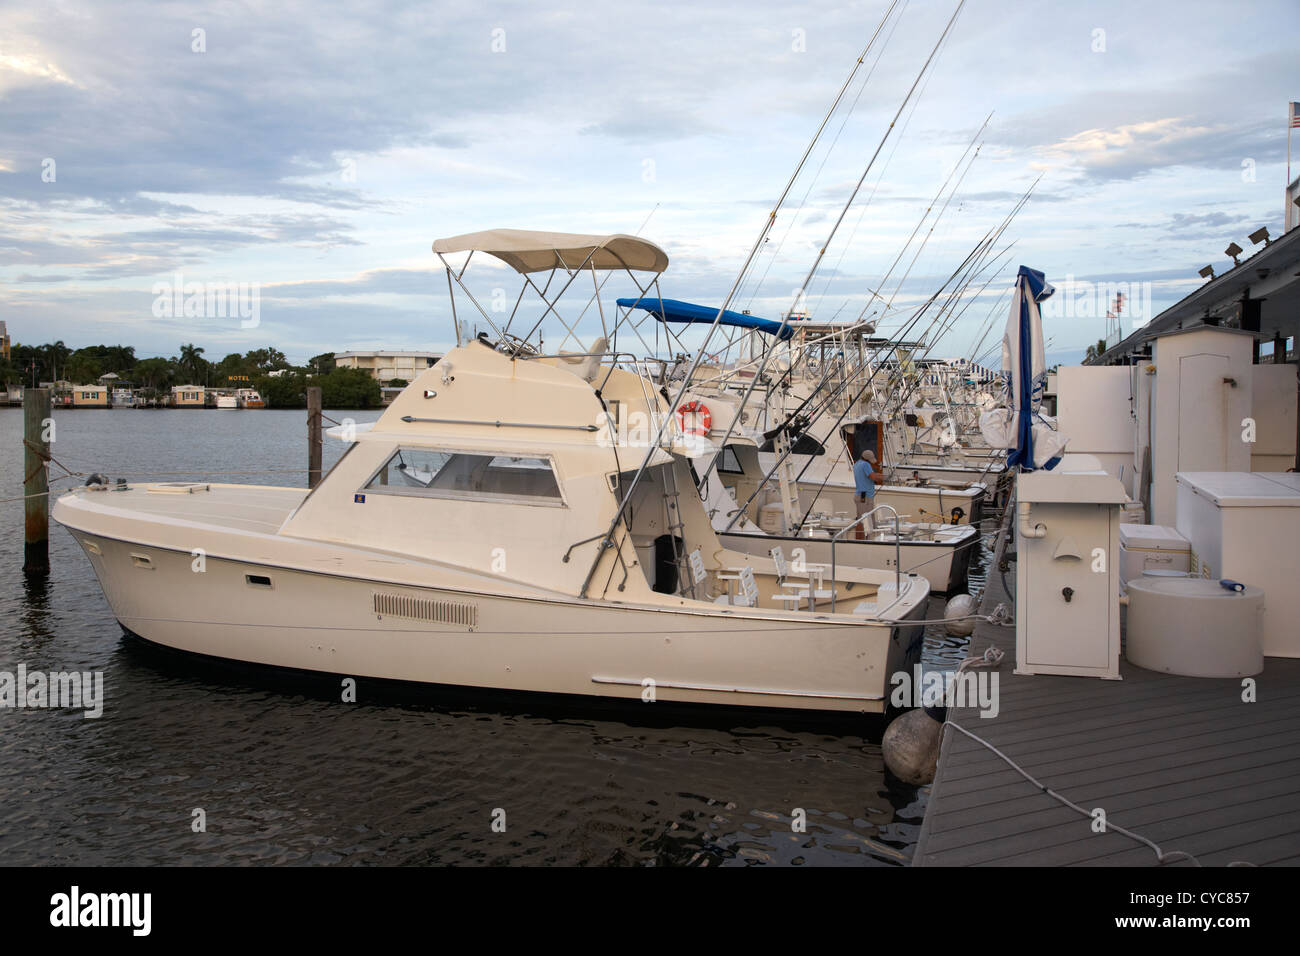 Charterschiffe charter Boot Zeile Stadt Marina Key West Florida usa Stockfoto